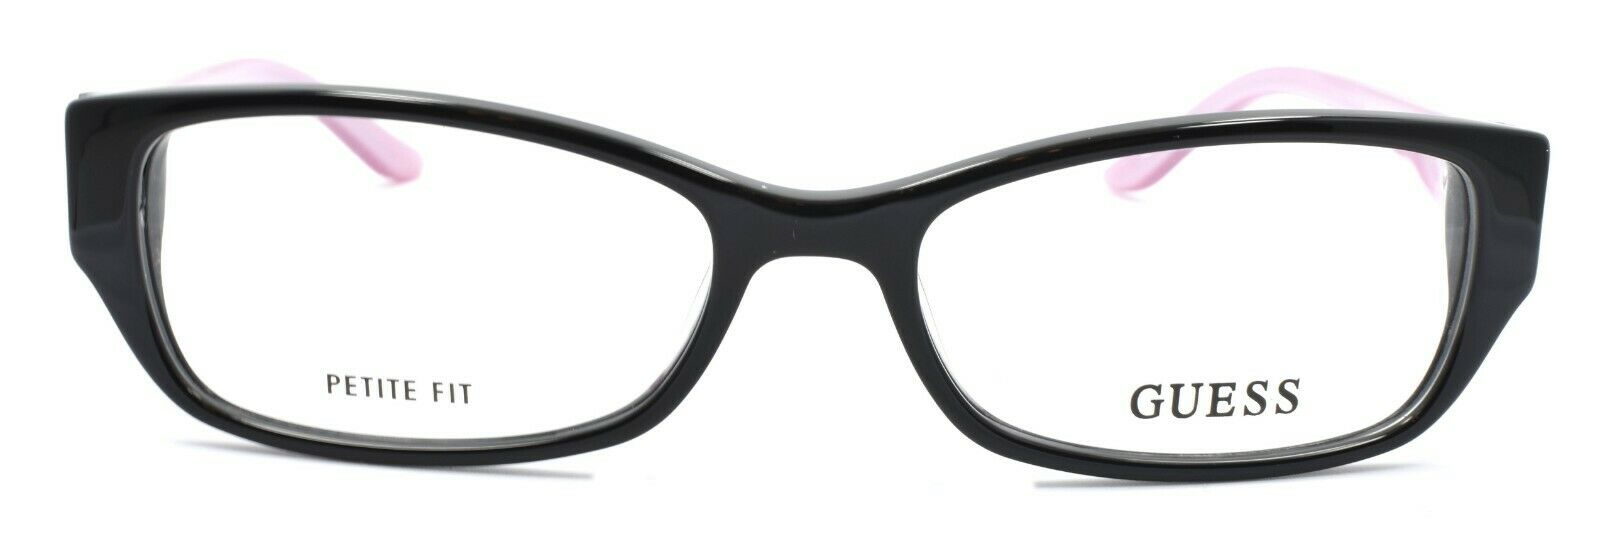 2-GUESS GU2305 BLK Women's Eyeglasses Frames 52-16-140 Black / Pink + CASE-715583514775-IKSpecs